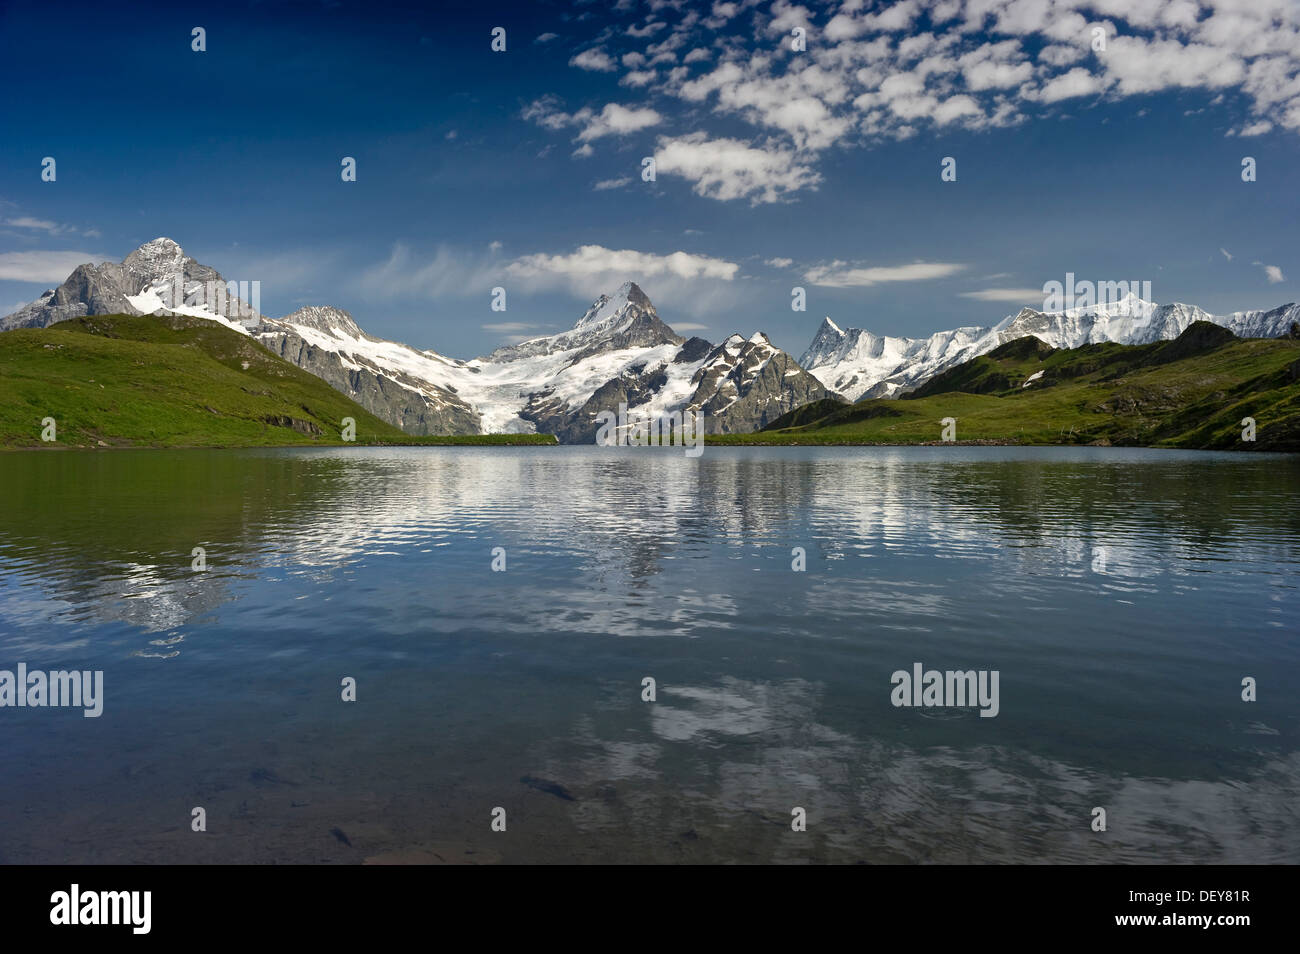 Bachalpsee lago vicino a Grindelwald, montagna Faulhorn e Finsteraarhorn sul retro, Oberland bernese, il Cantone di Berna, Svizzera Foto Stock